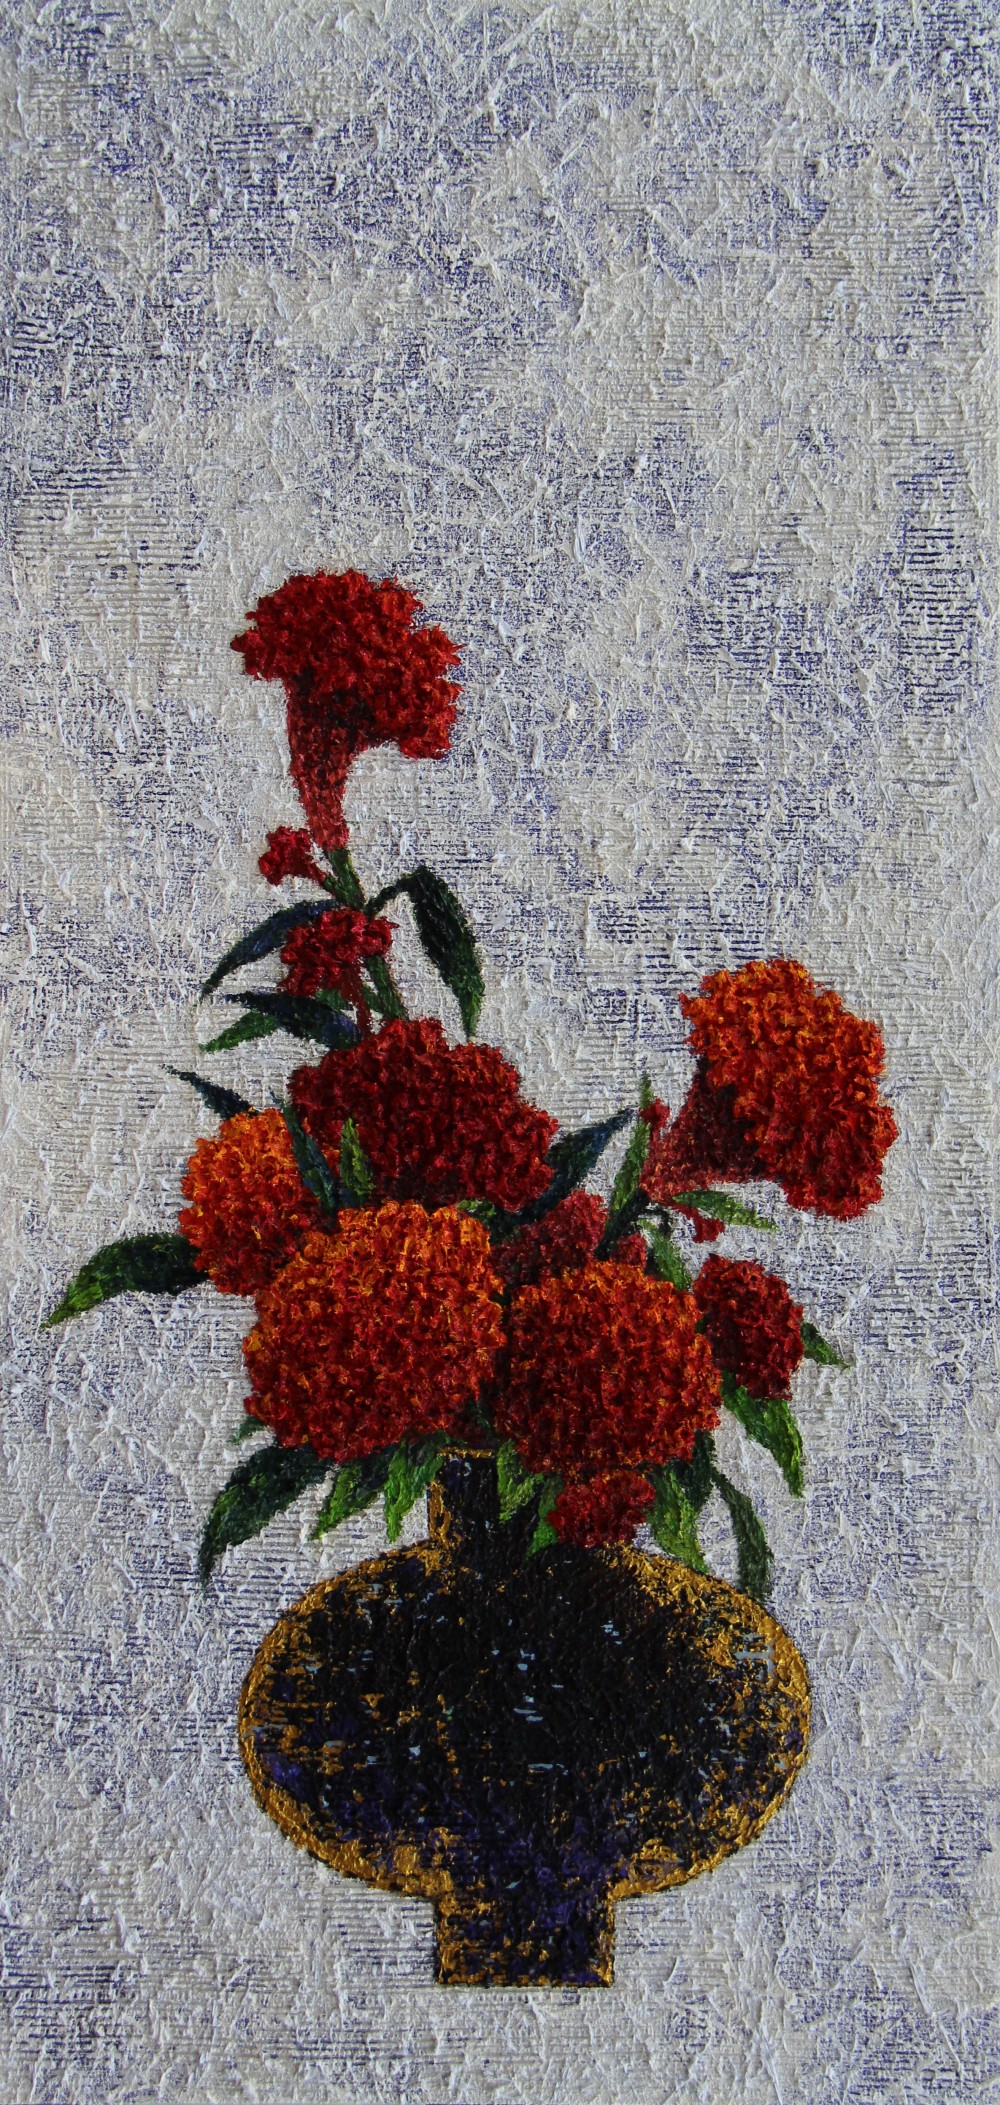 cockscomb-행복이야기2,125x65cm, oil on canvas, 2017